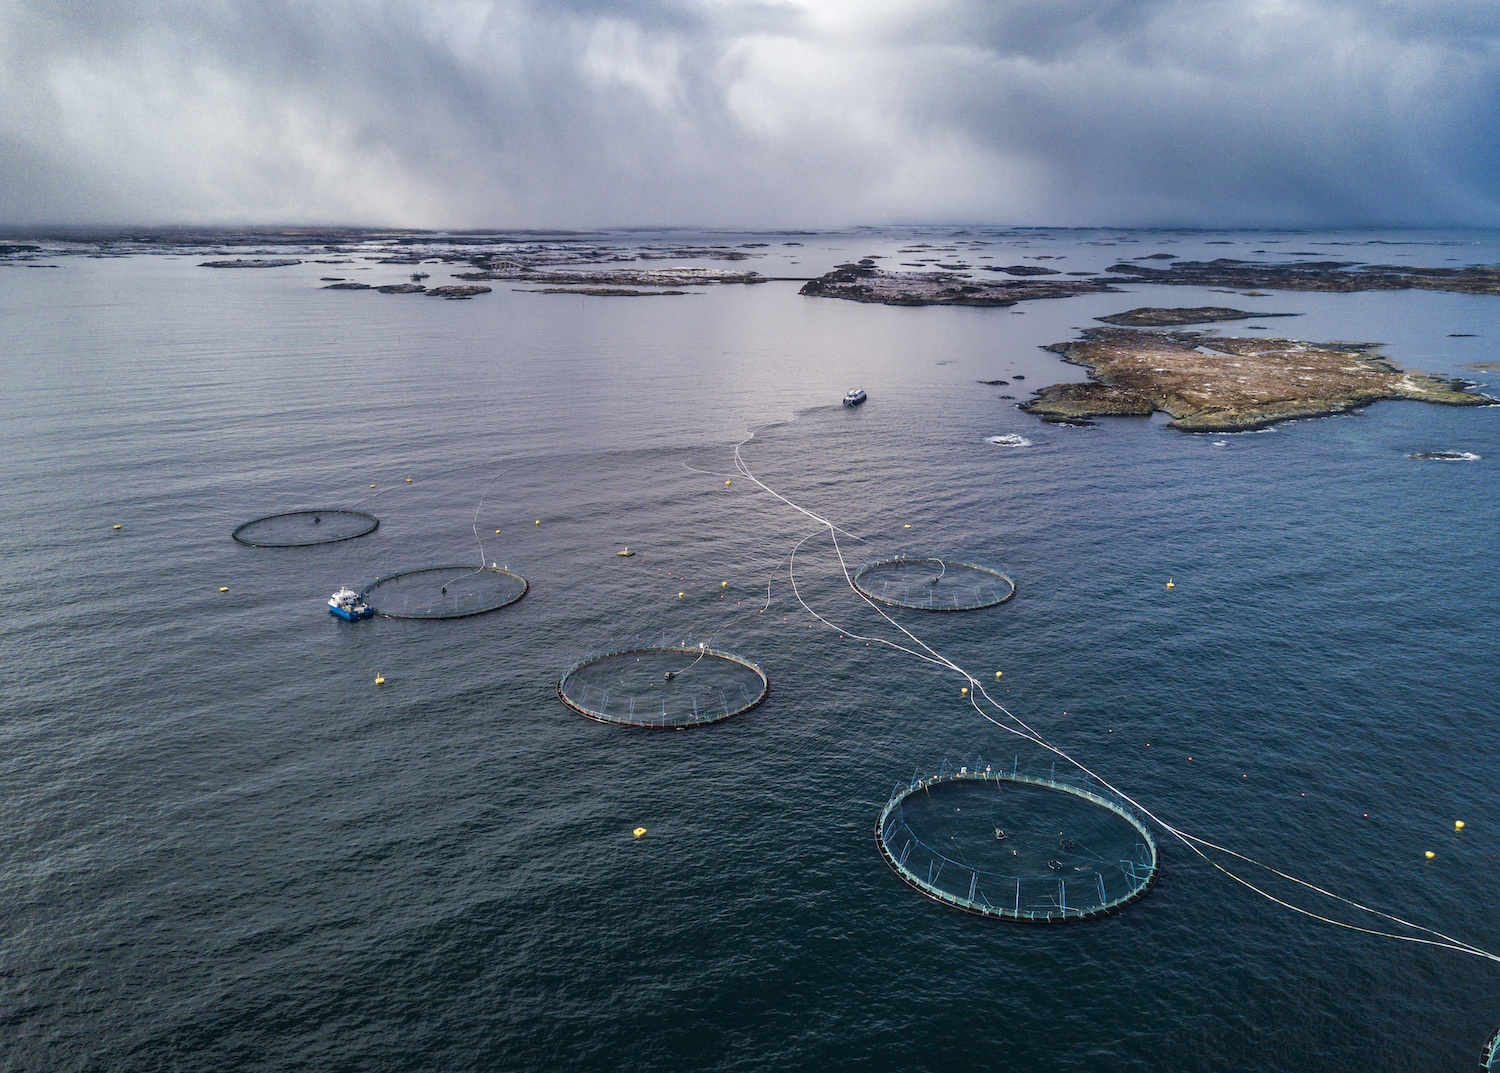 Birds' eye view of a Norwegian aquaculture farm